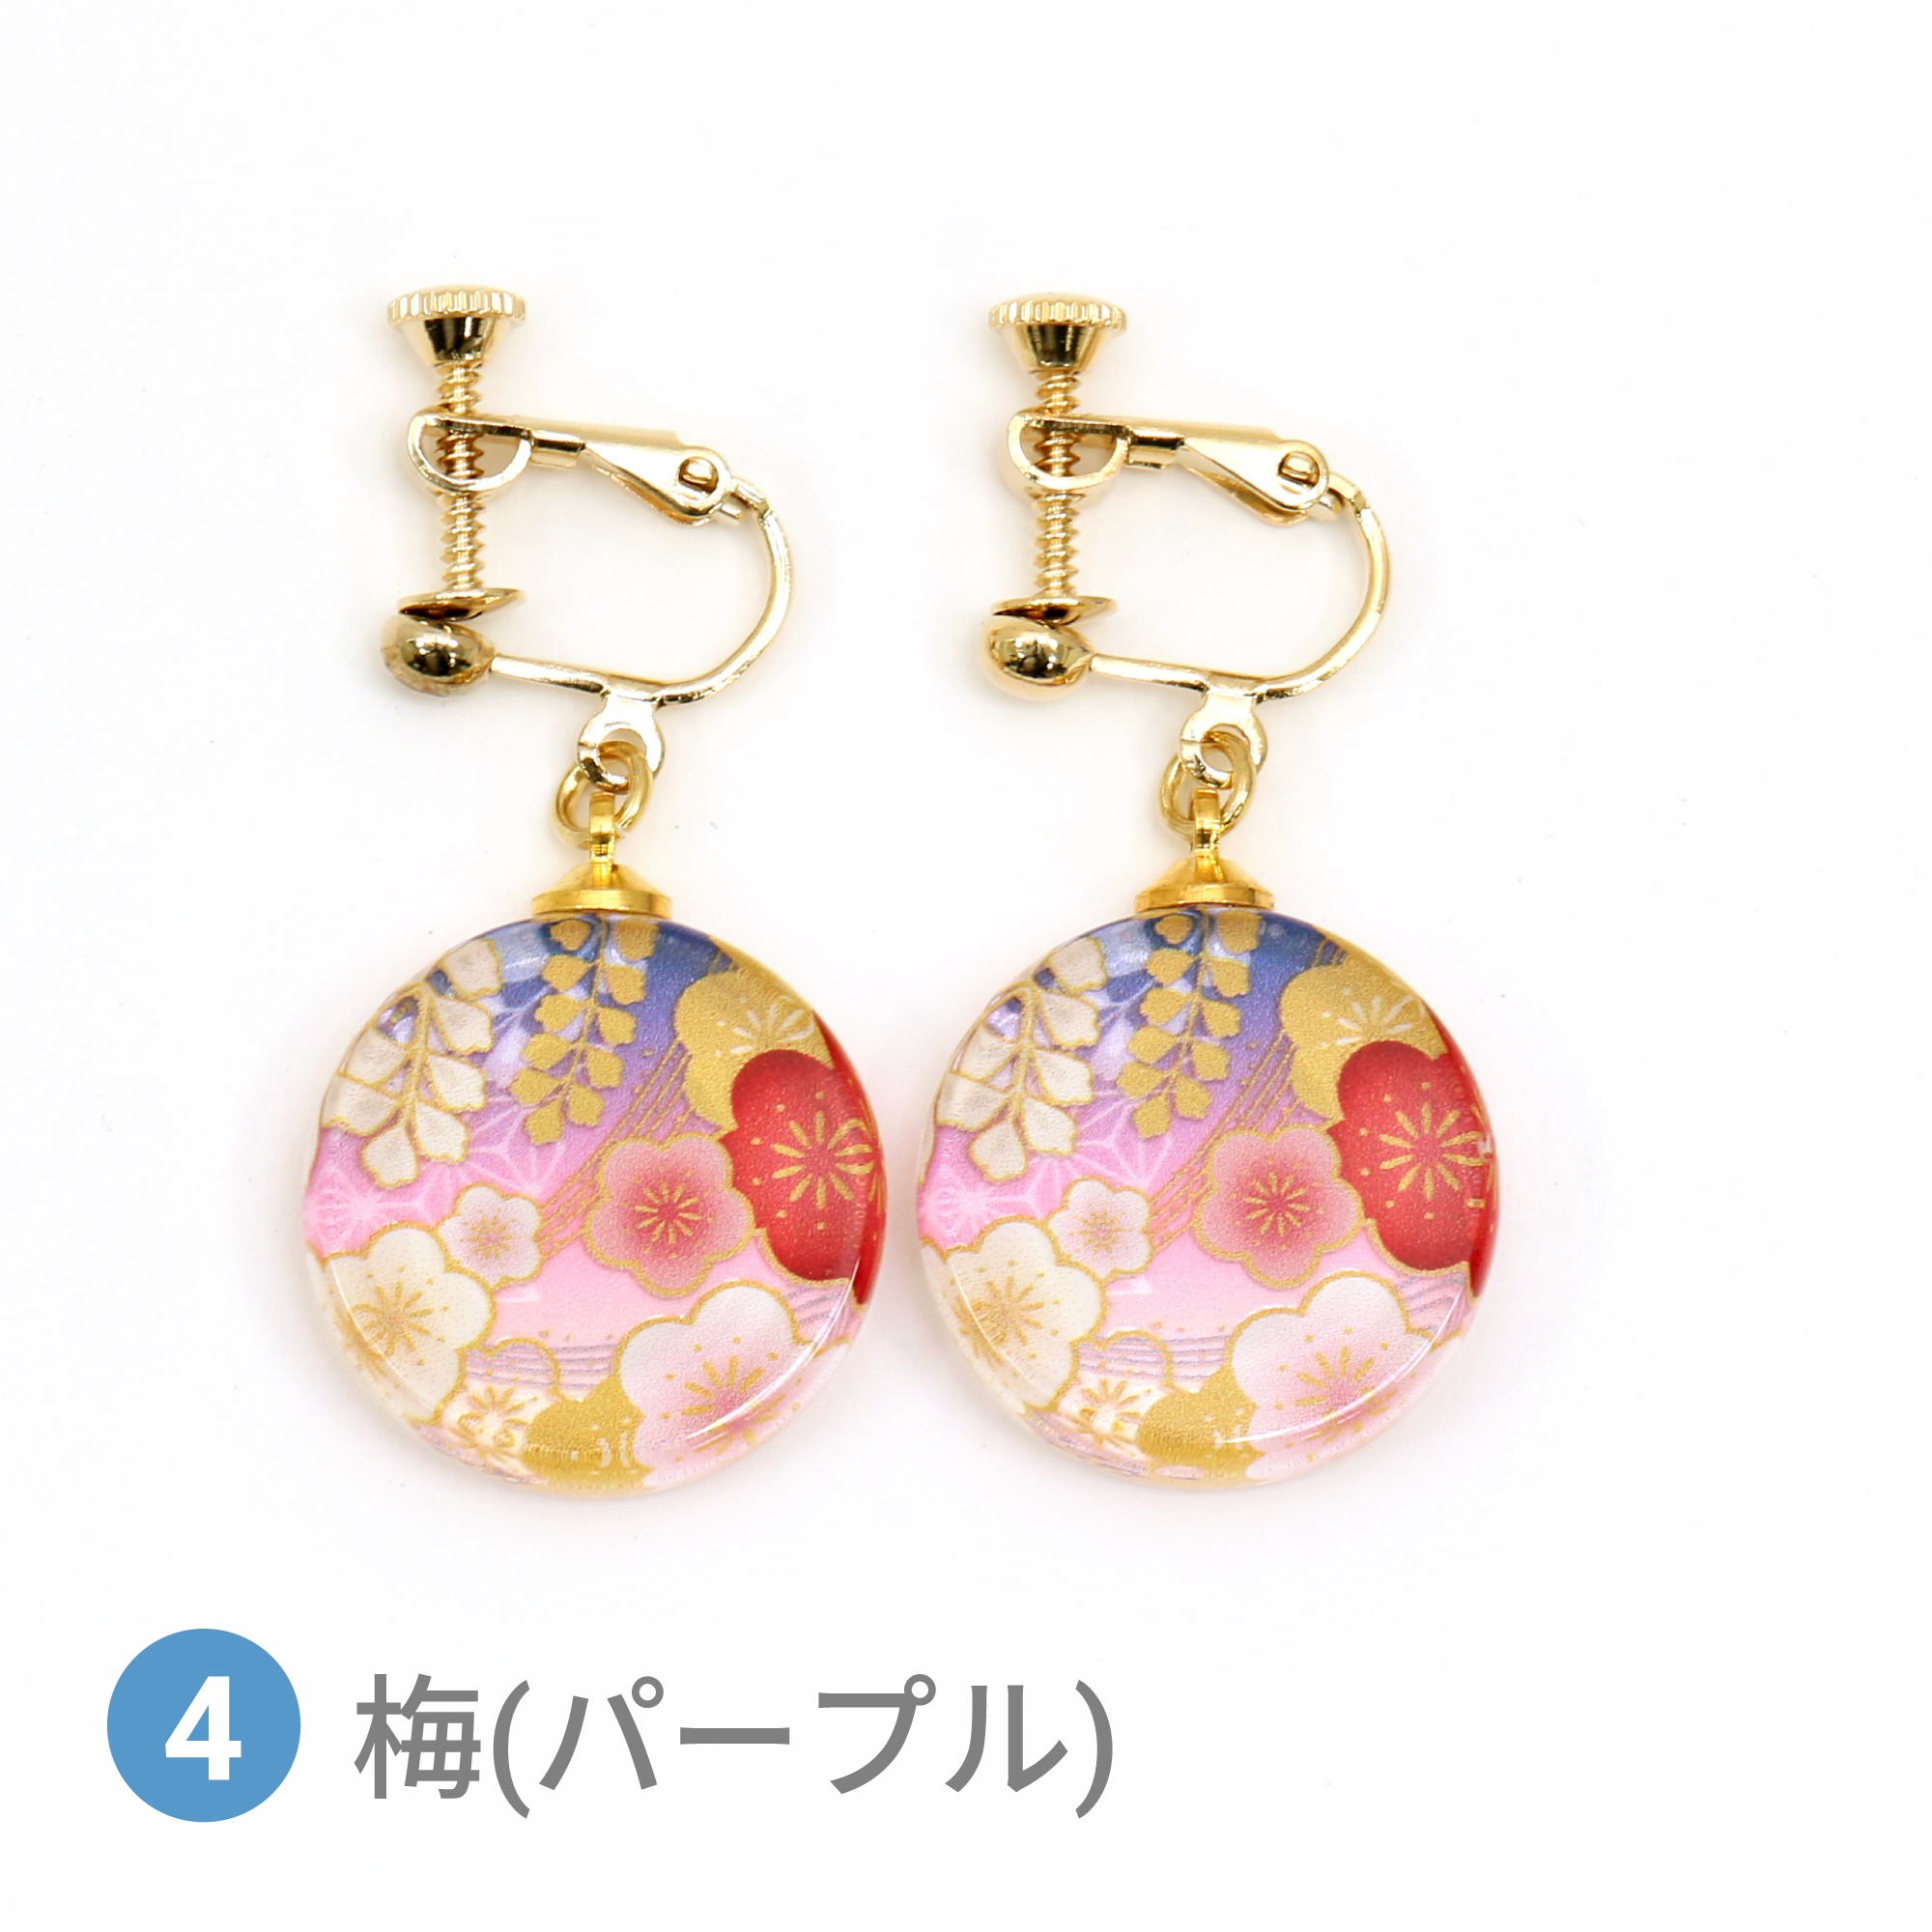 Glass accessories Earring WABANA Japanese apricot purple round shape